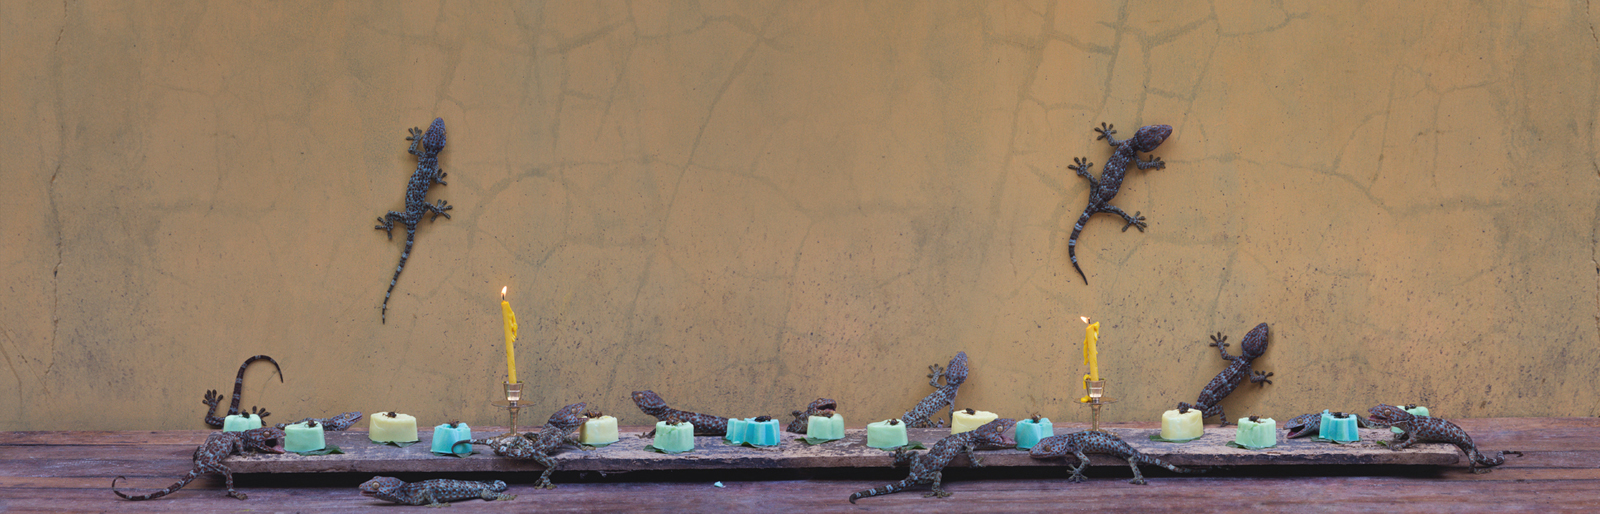  The Gecko Feast  Indonesia, 2015  10”x31” | 20”x62” | 40”x124” 